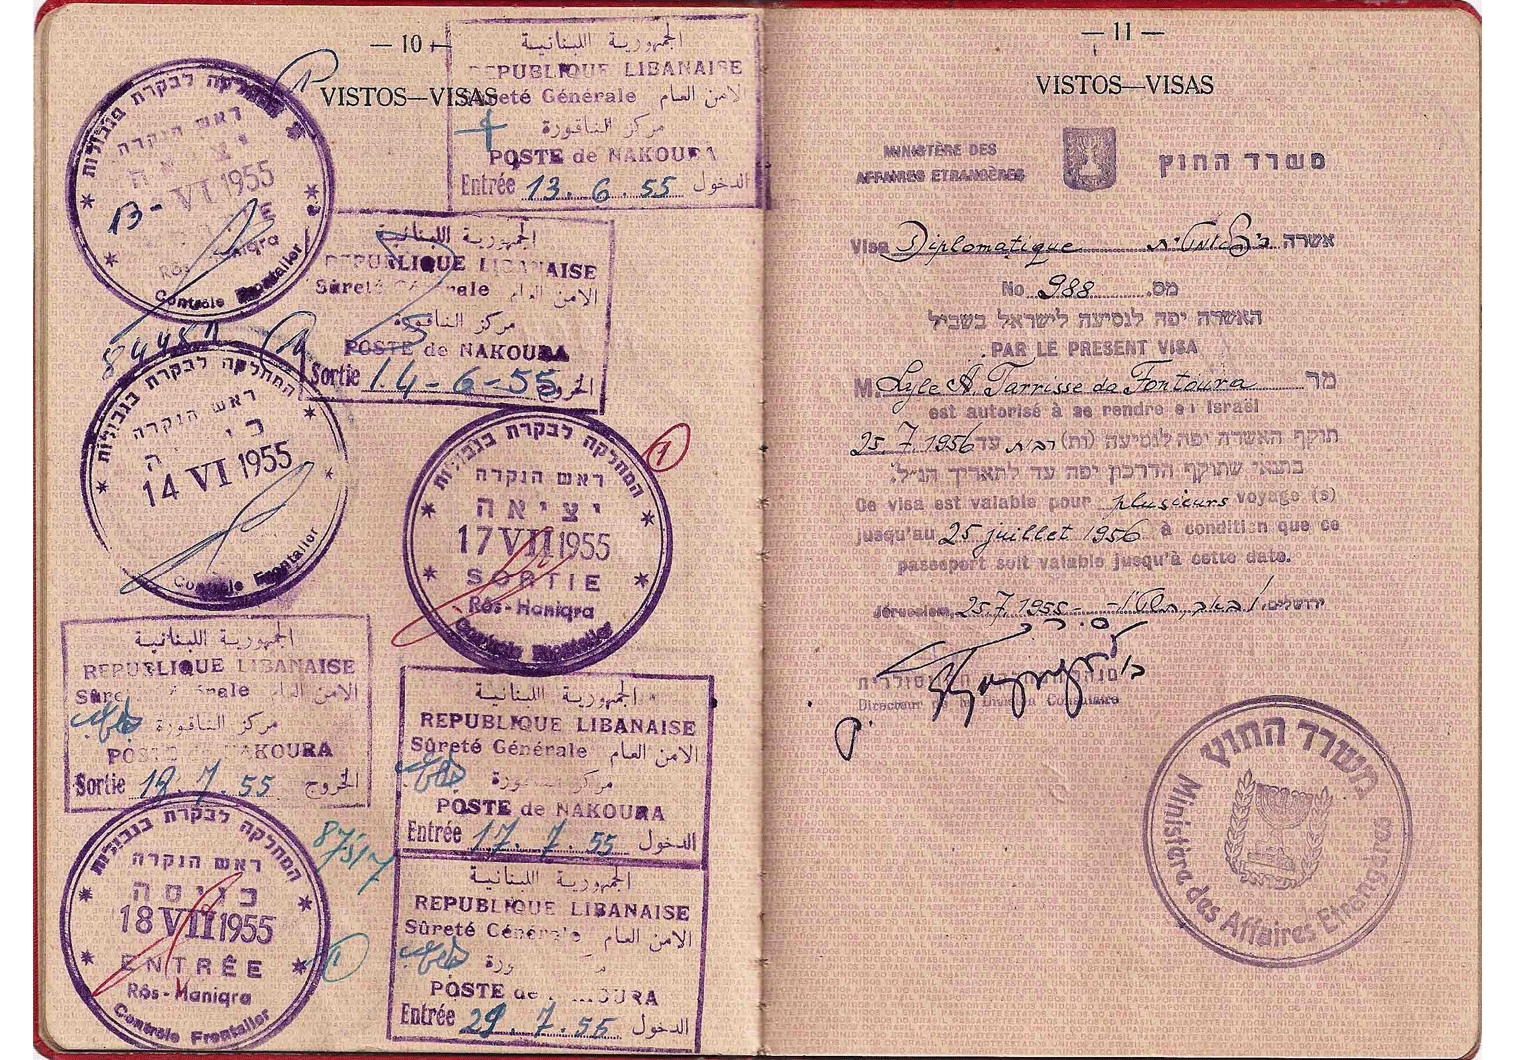 Israeli diplomatic visa